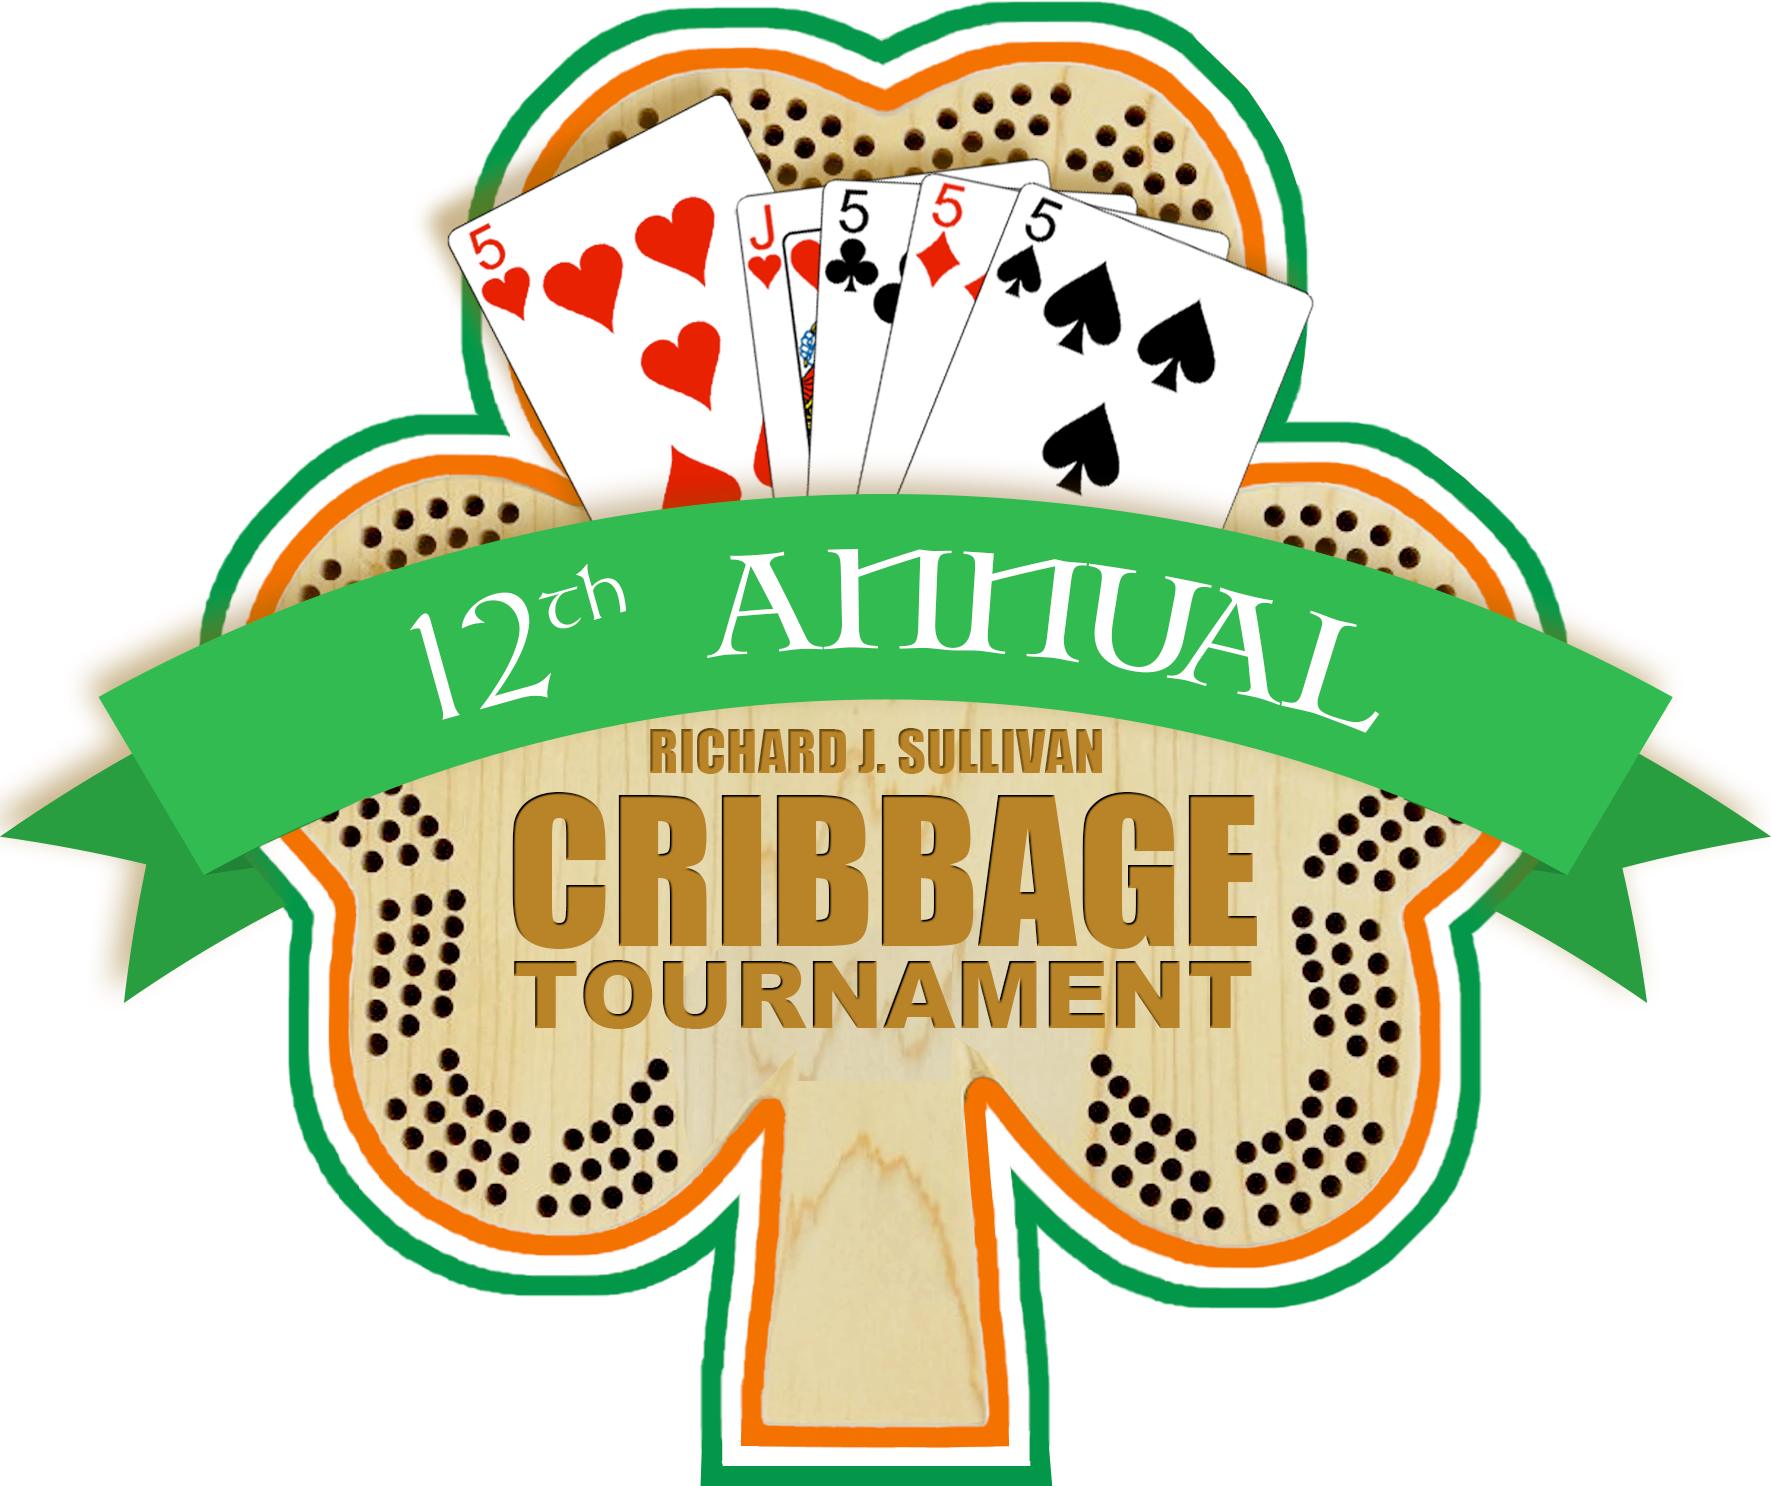 12th Annual Richard J. Sullivan Cribbage Tournament